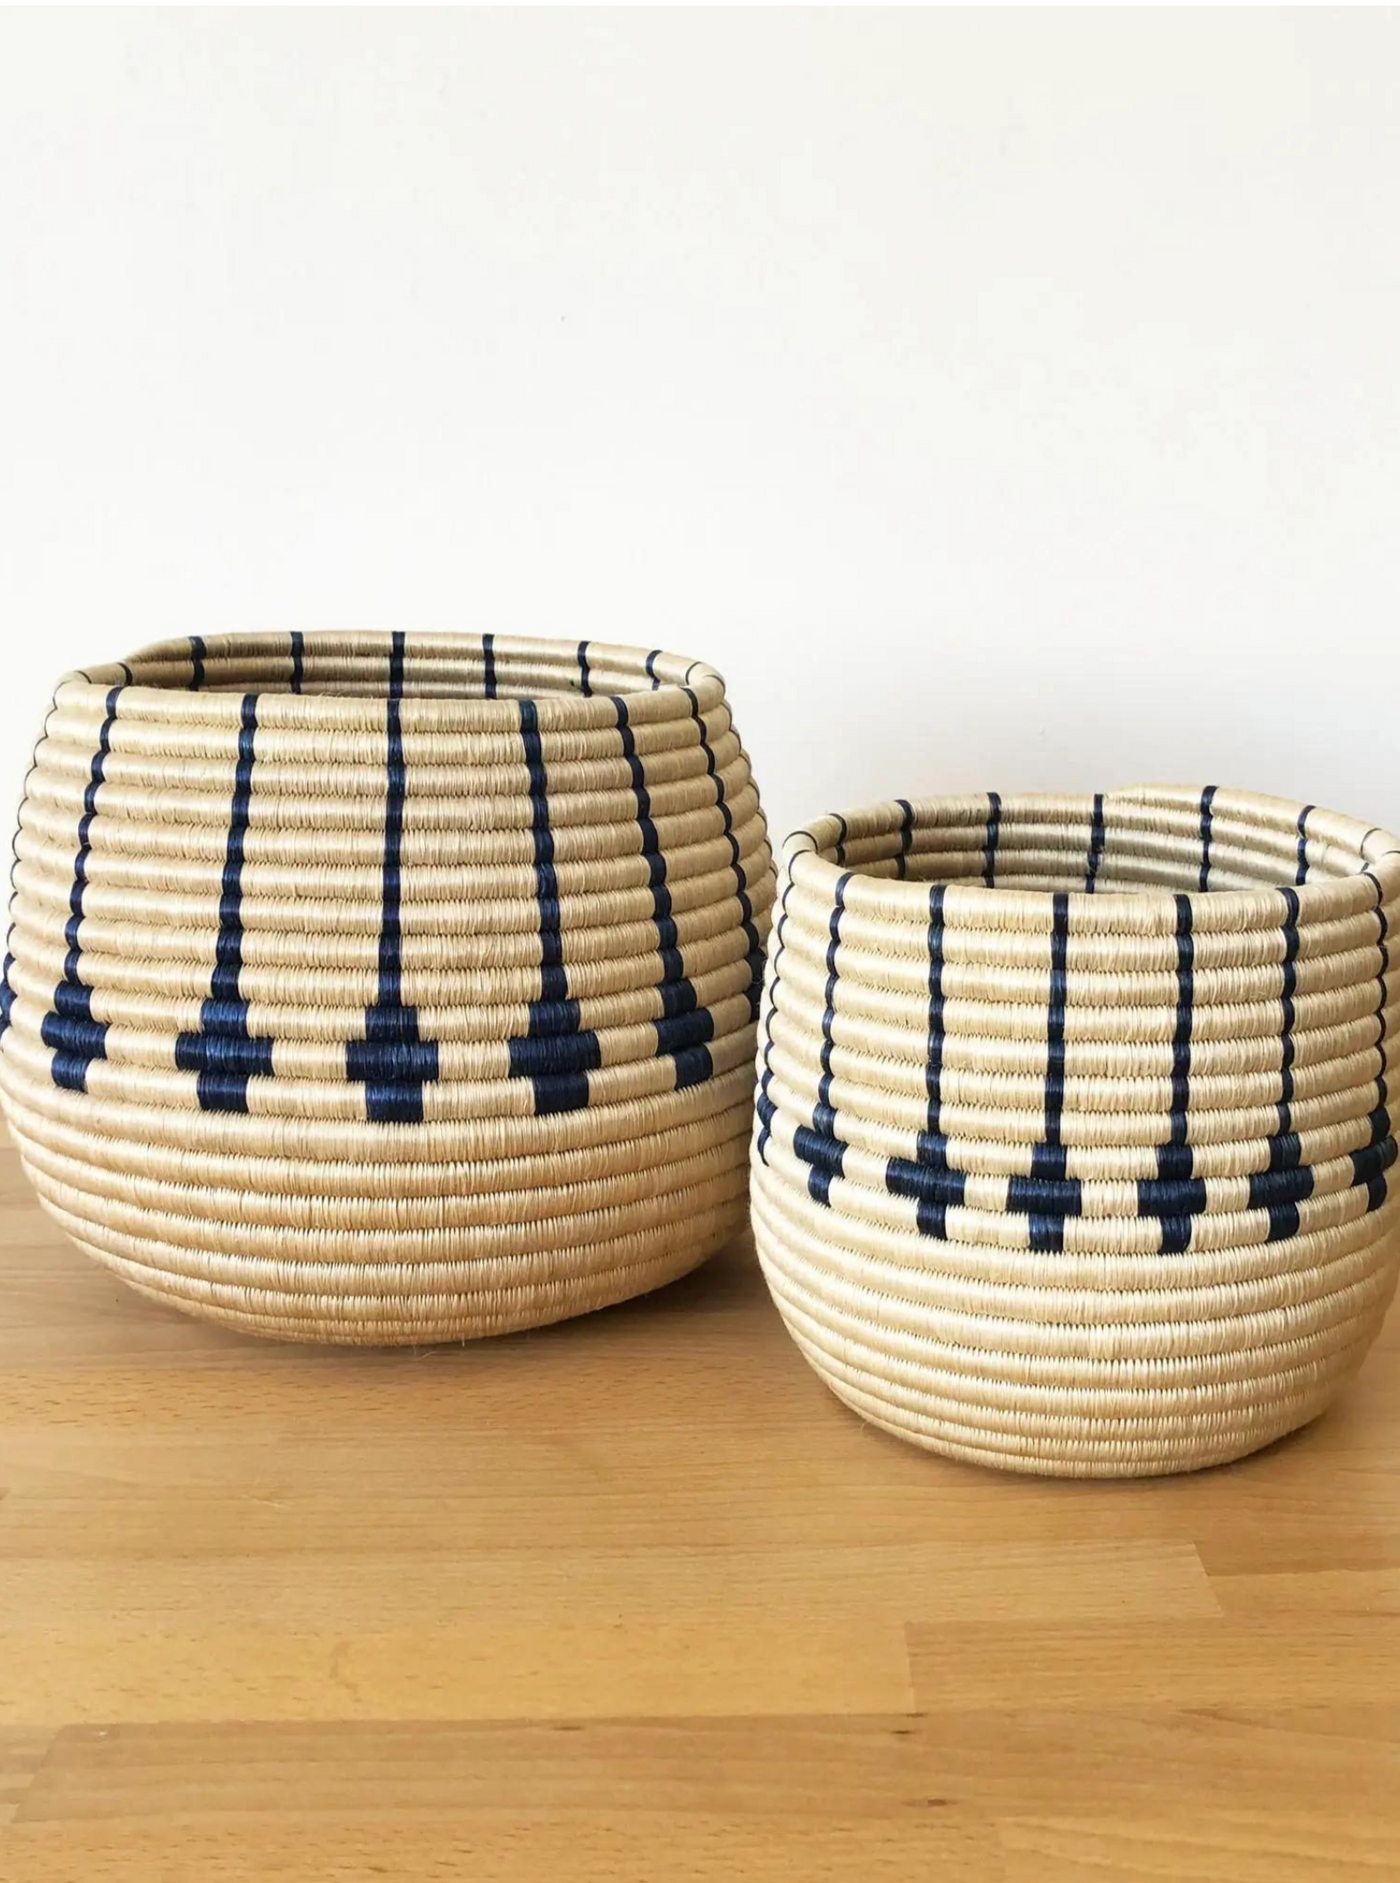 Rukira Honey Pot Basket